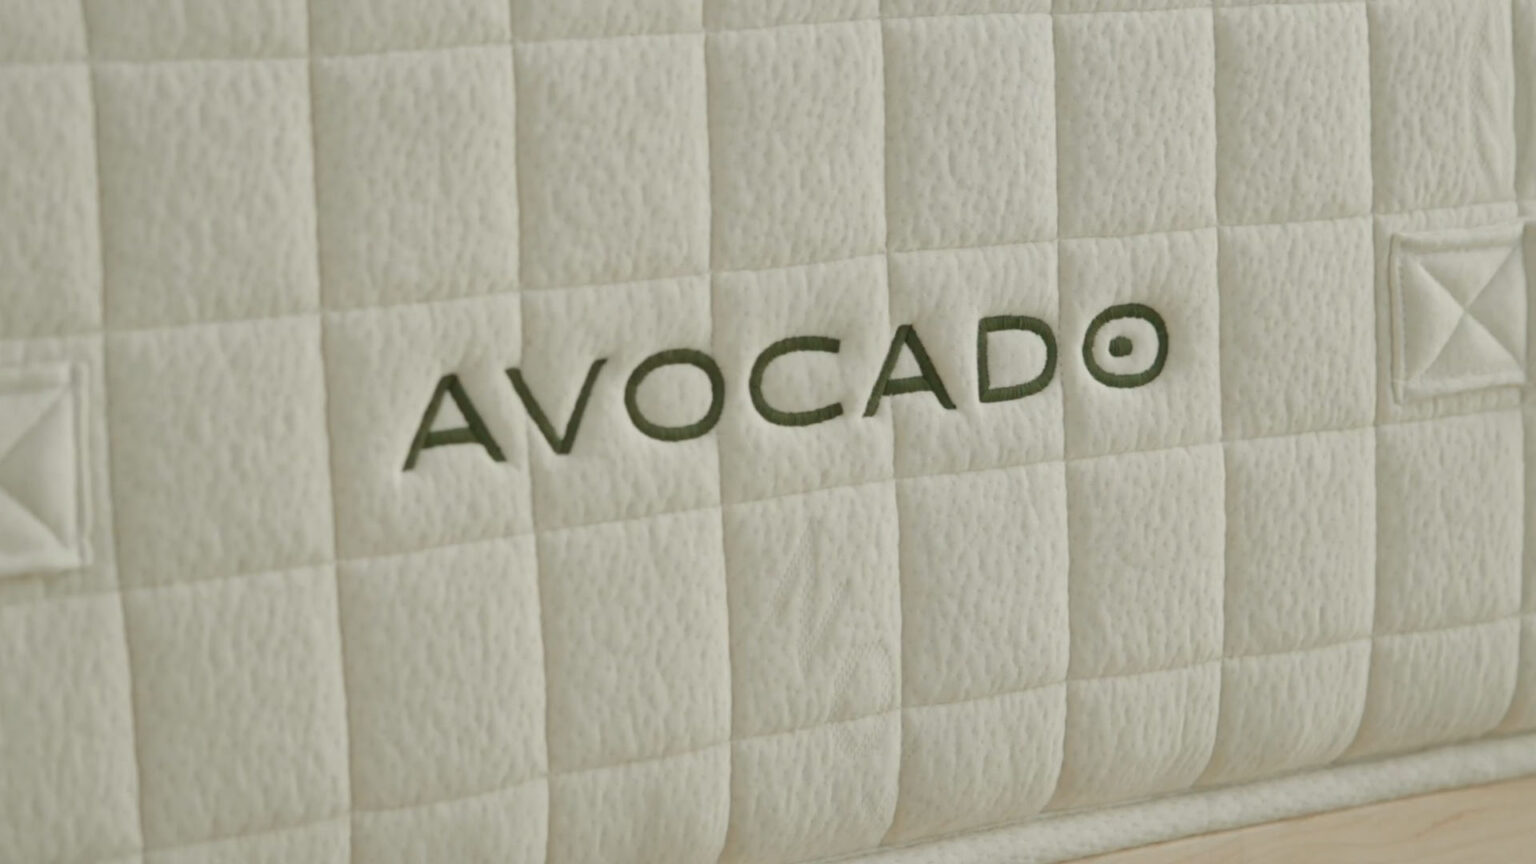 Avocado Mattress delivers to Moreno Valley